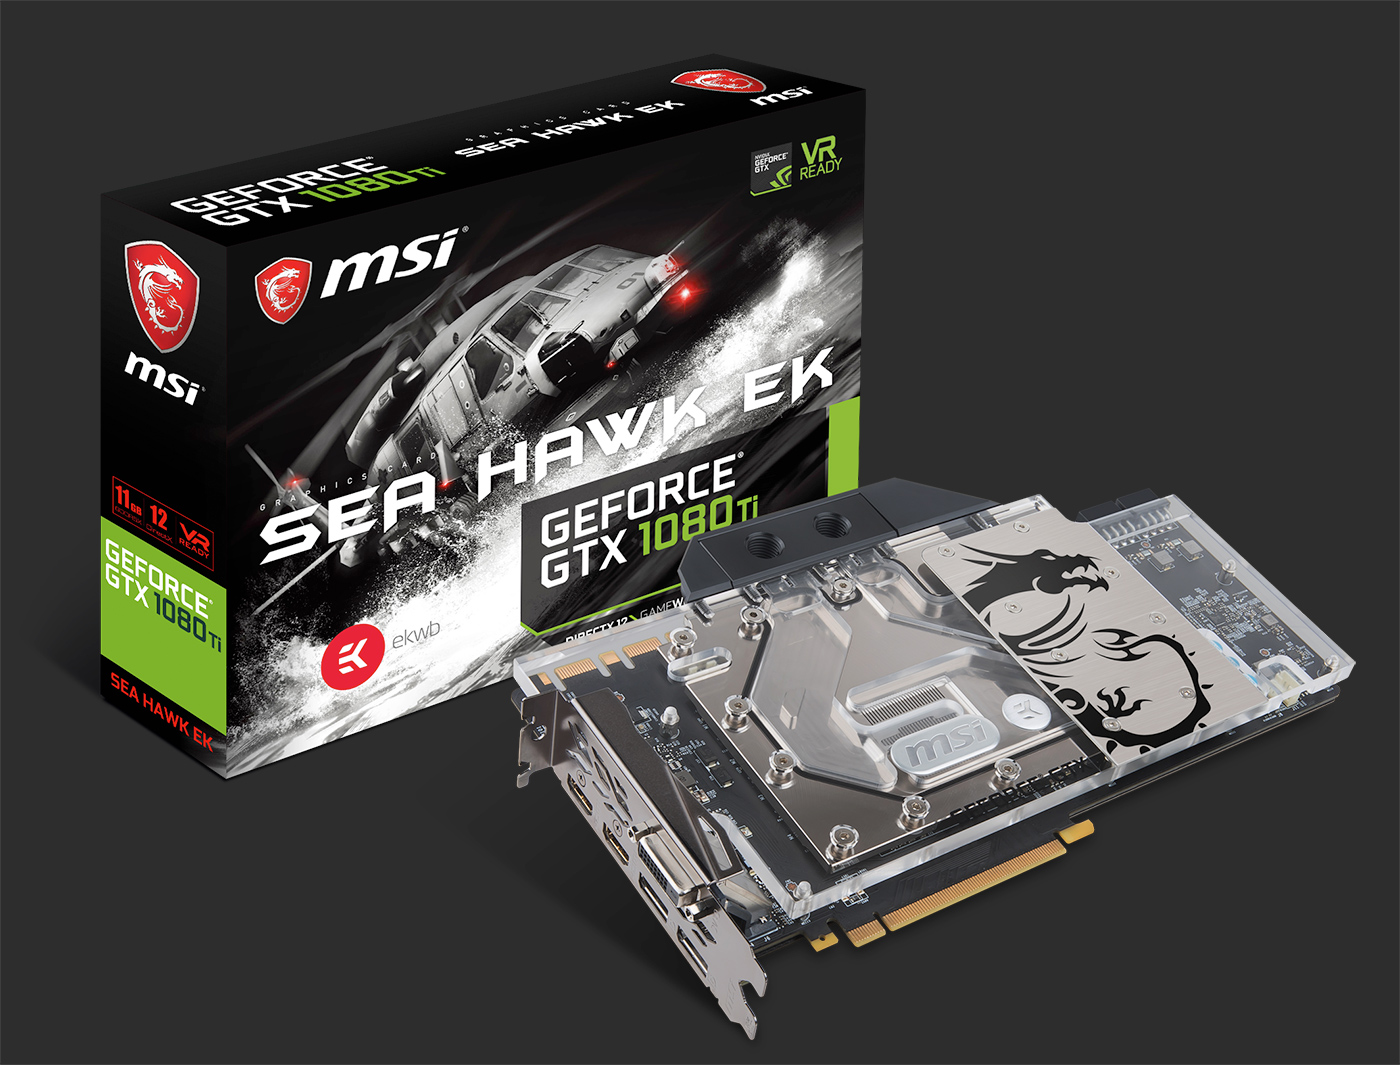 MSI® GeForce® GTX 1080 Ti graphics cards